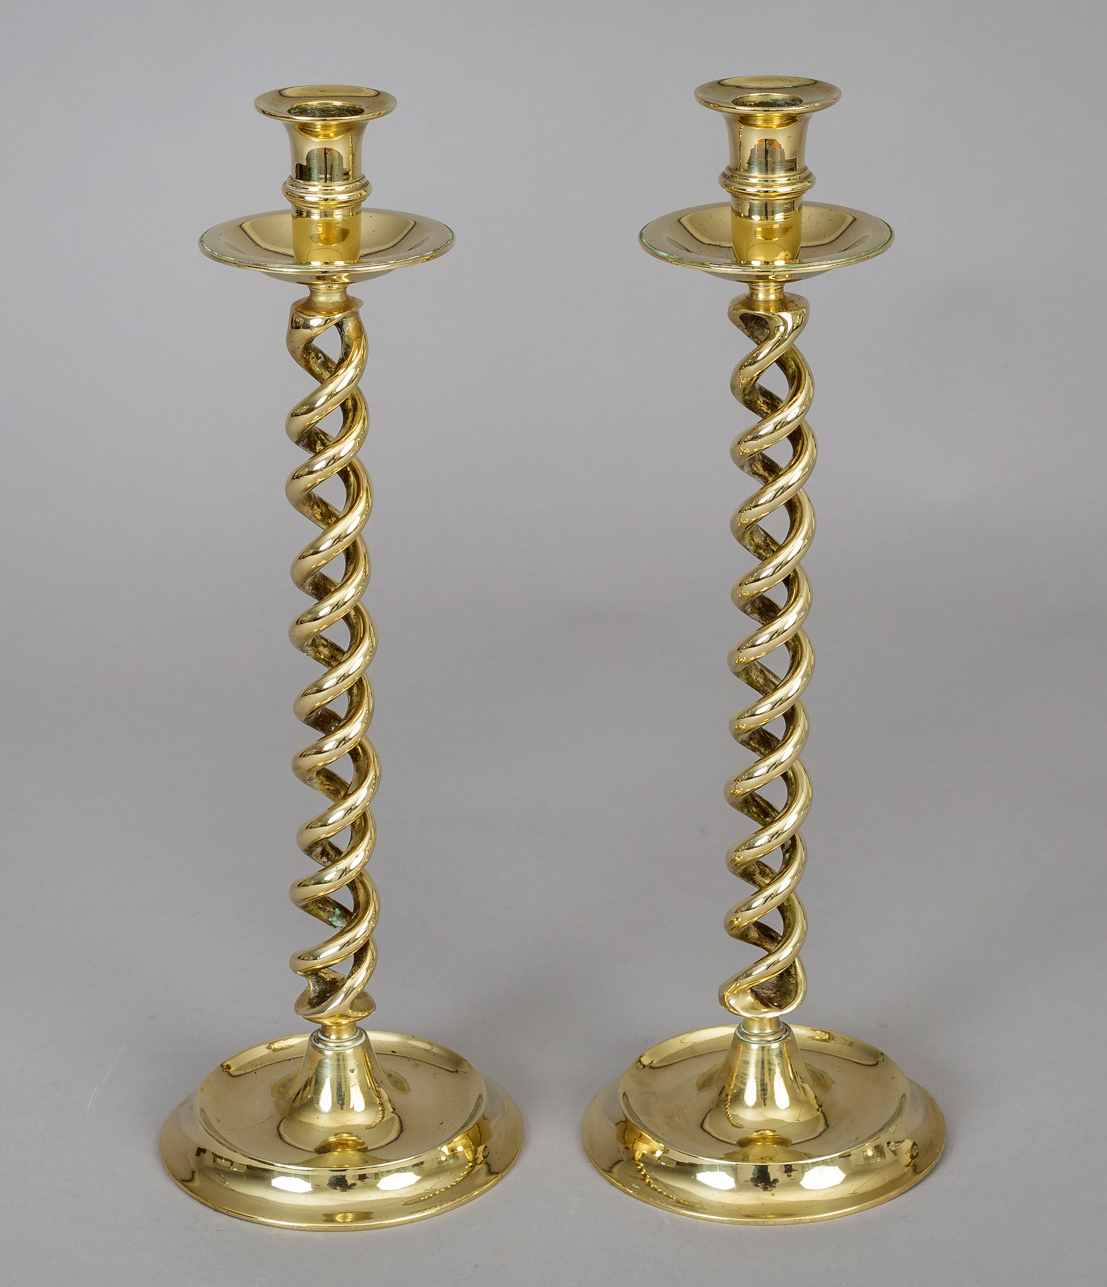 Heavy Antique English Brass Open Barley Twist Candlesticks C.1900, 83321